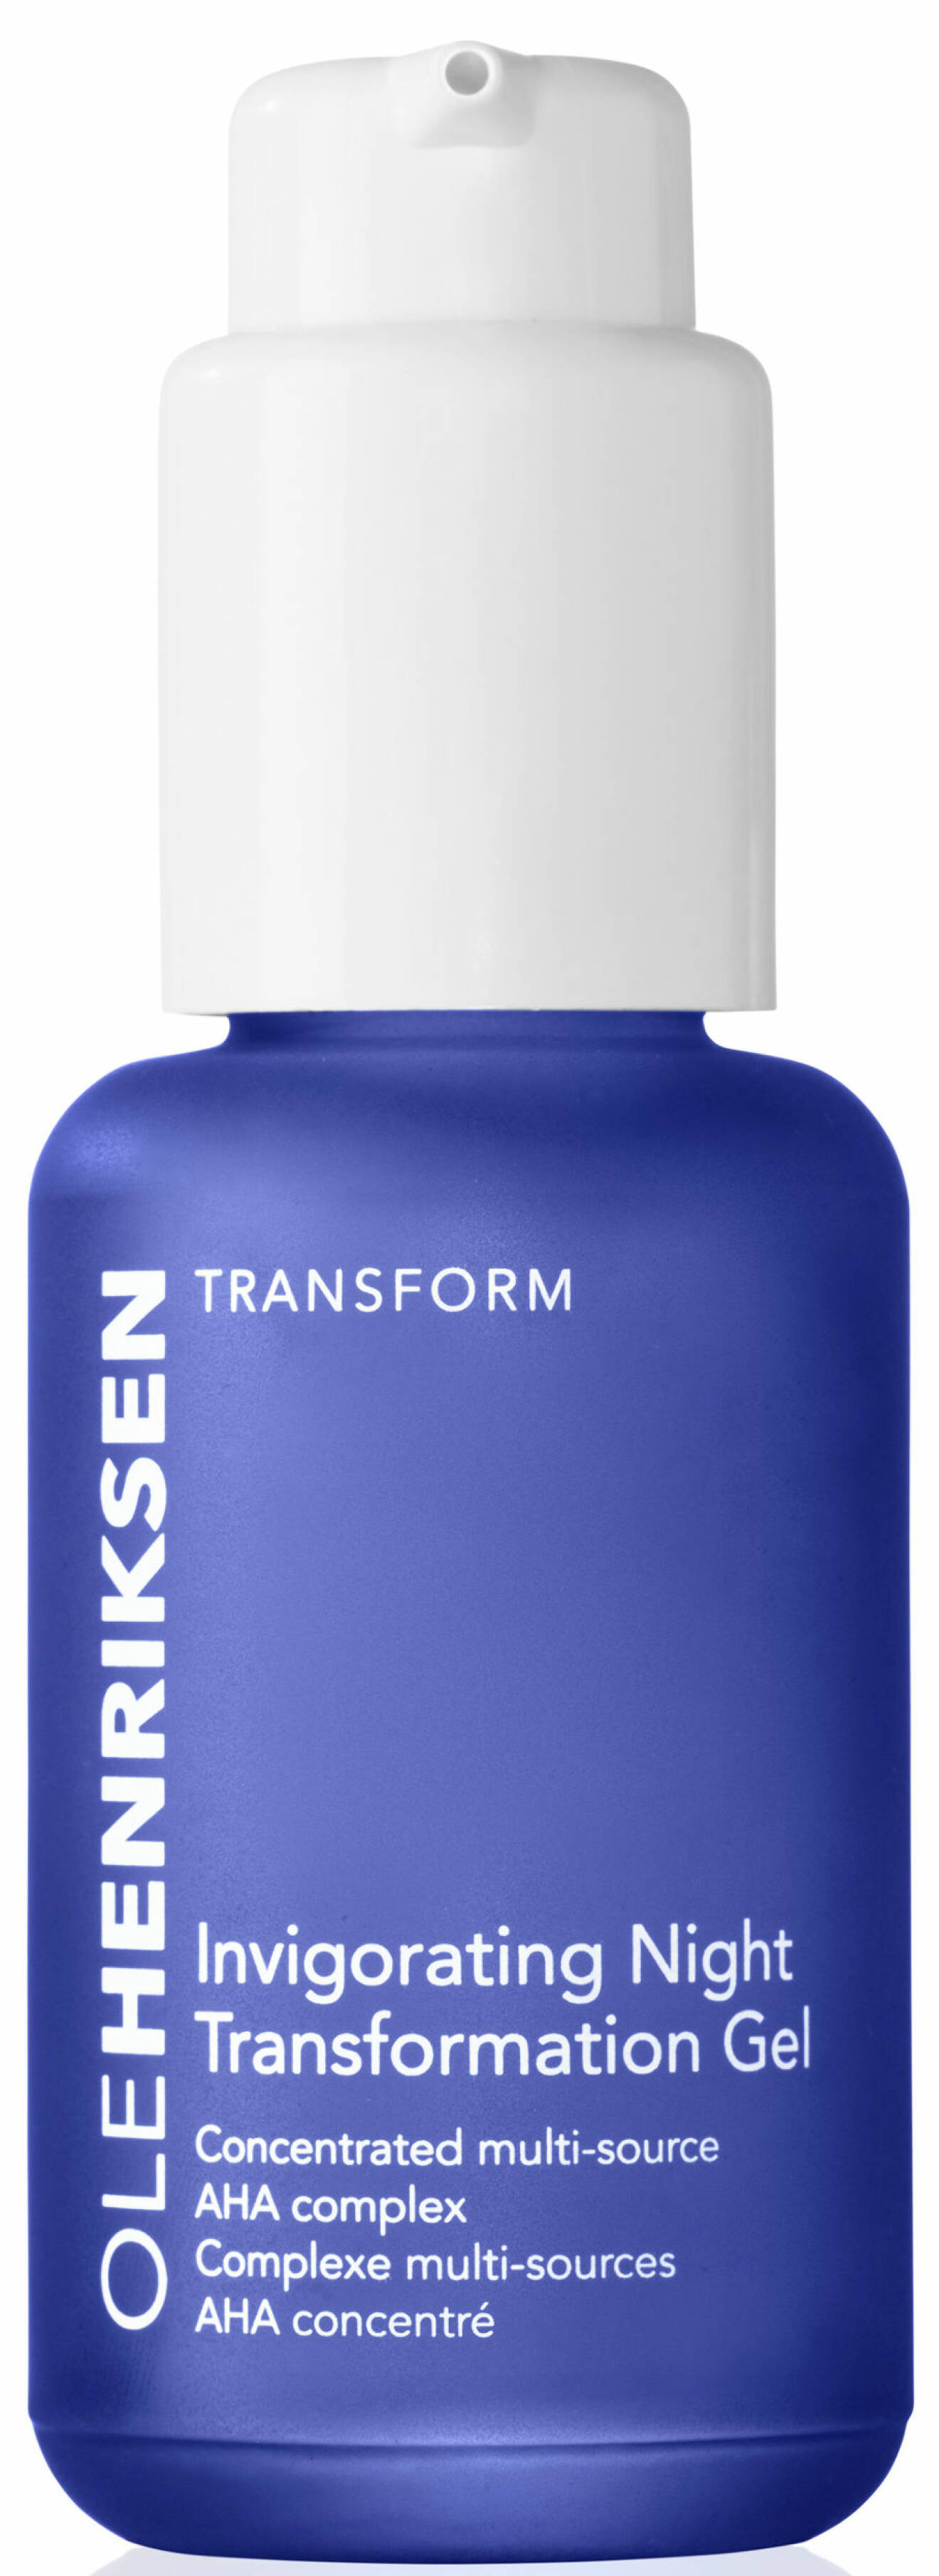 Serum: Invigorating night transformation gel, Ole Henriksen 